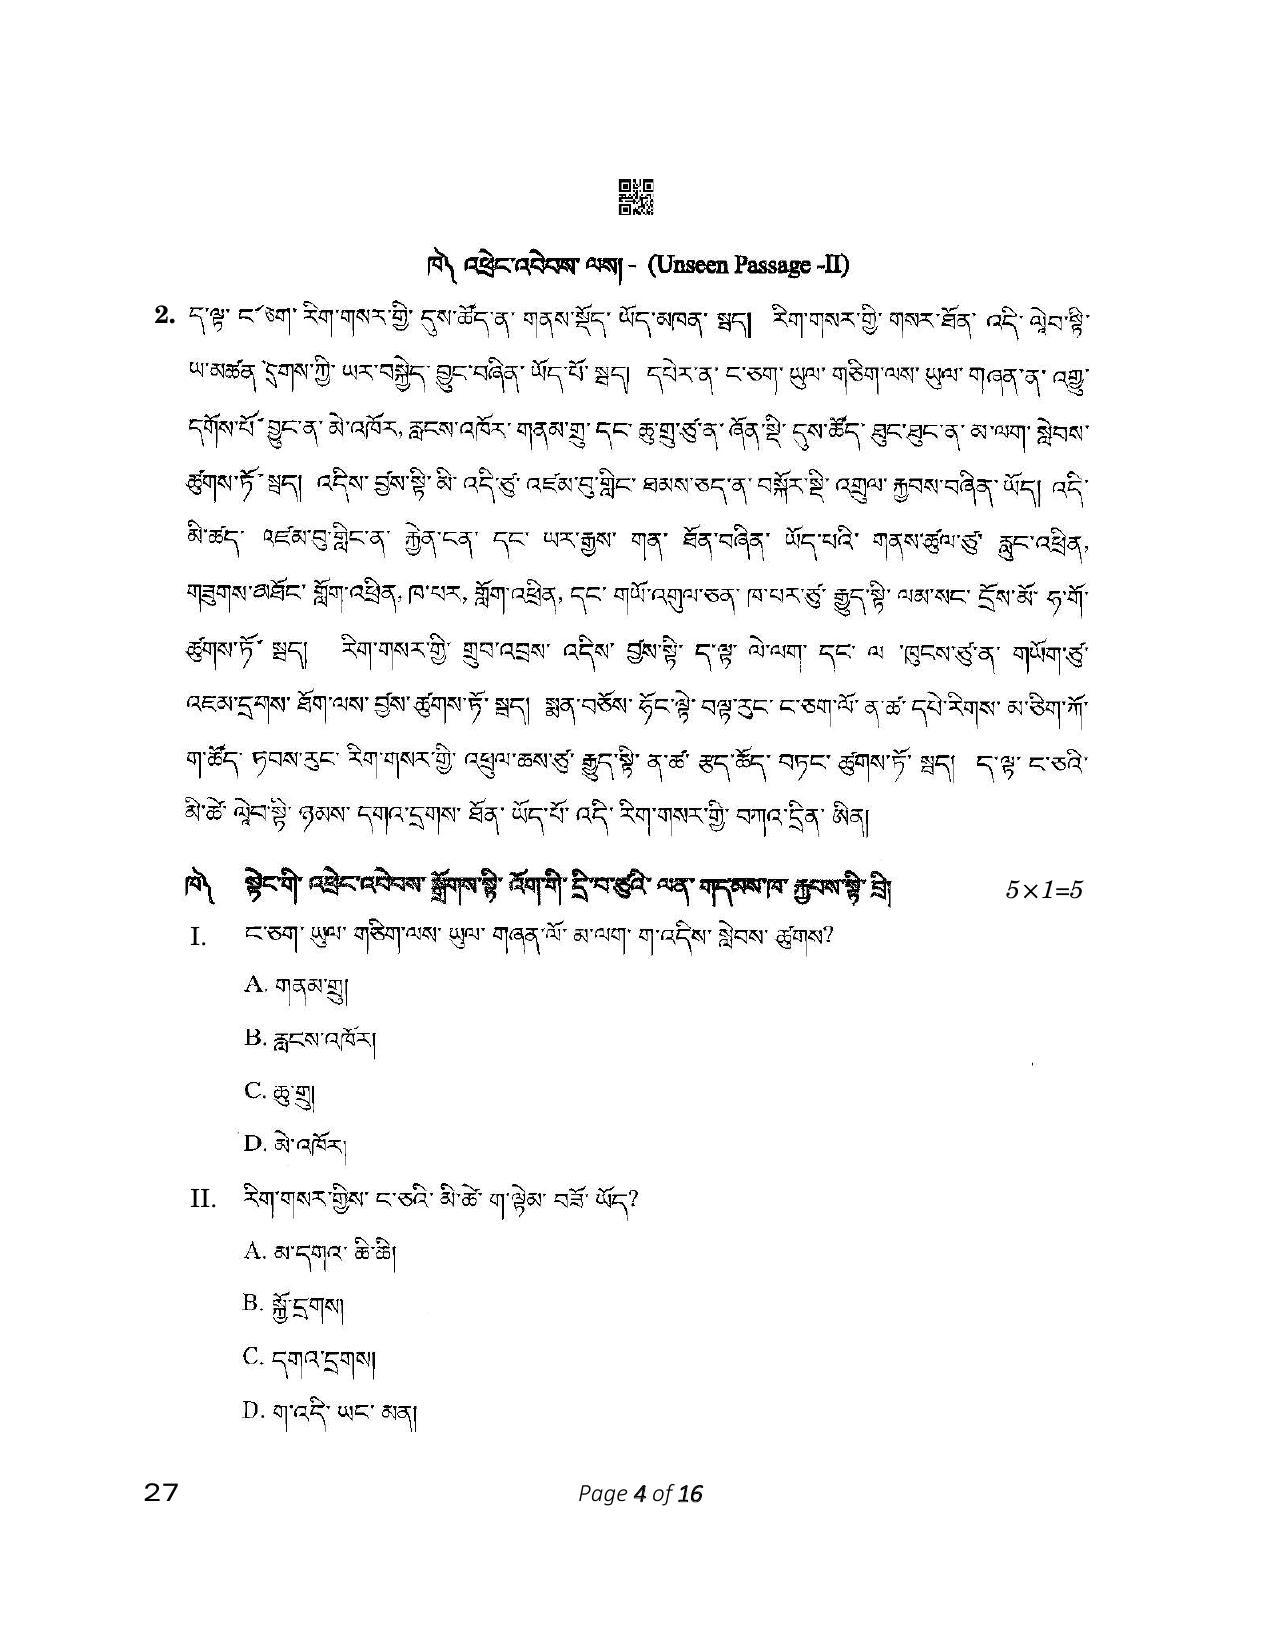 CBSE Class 12 27_Bhutia 2023 2023 Question Paper - Page 4